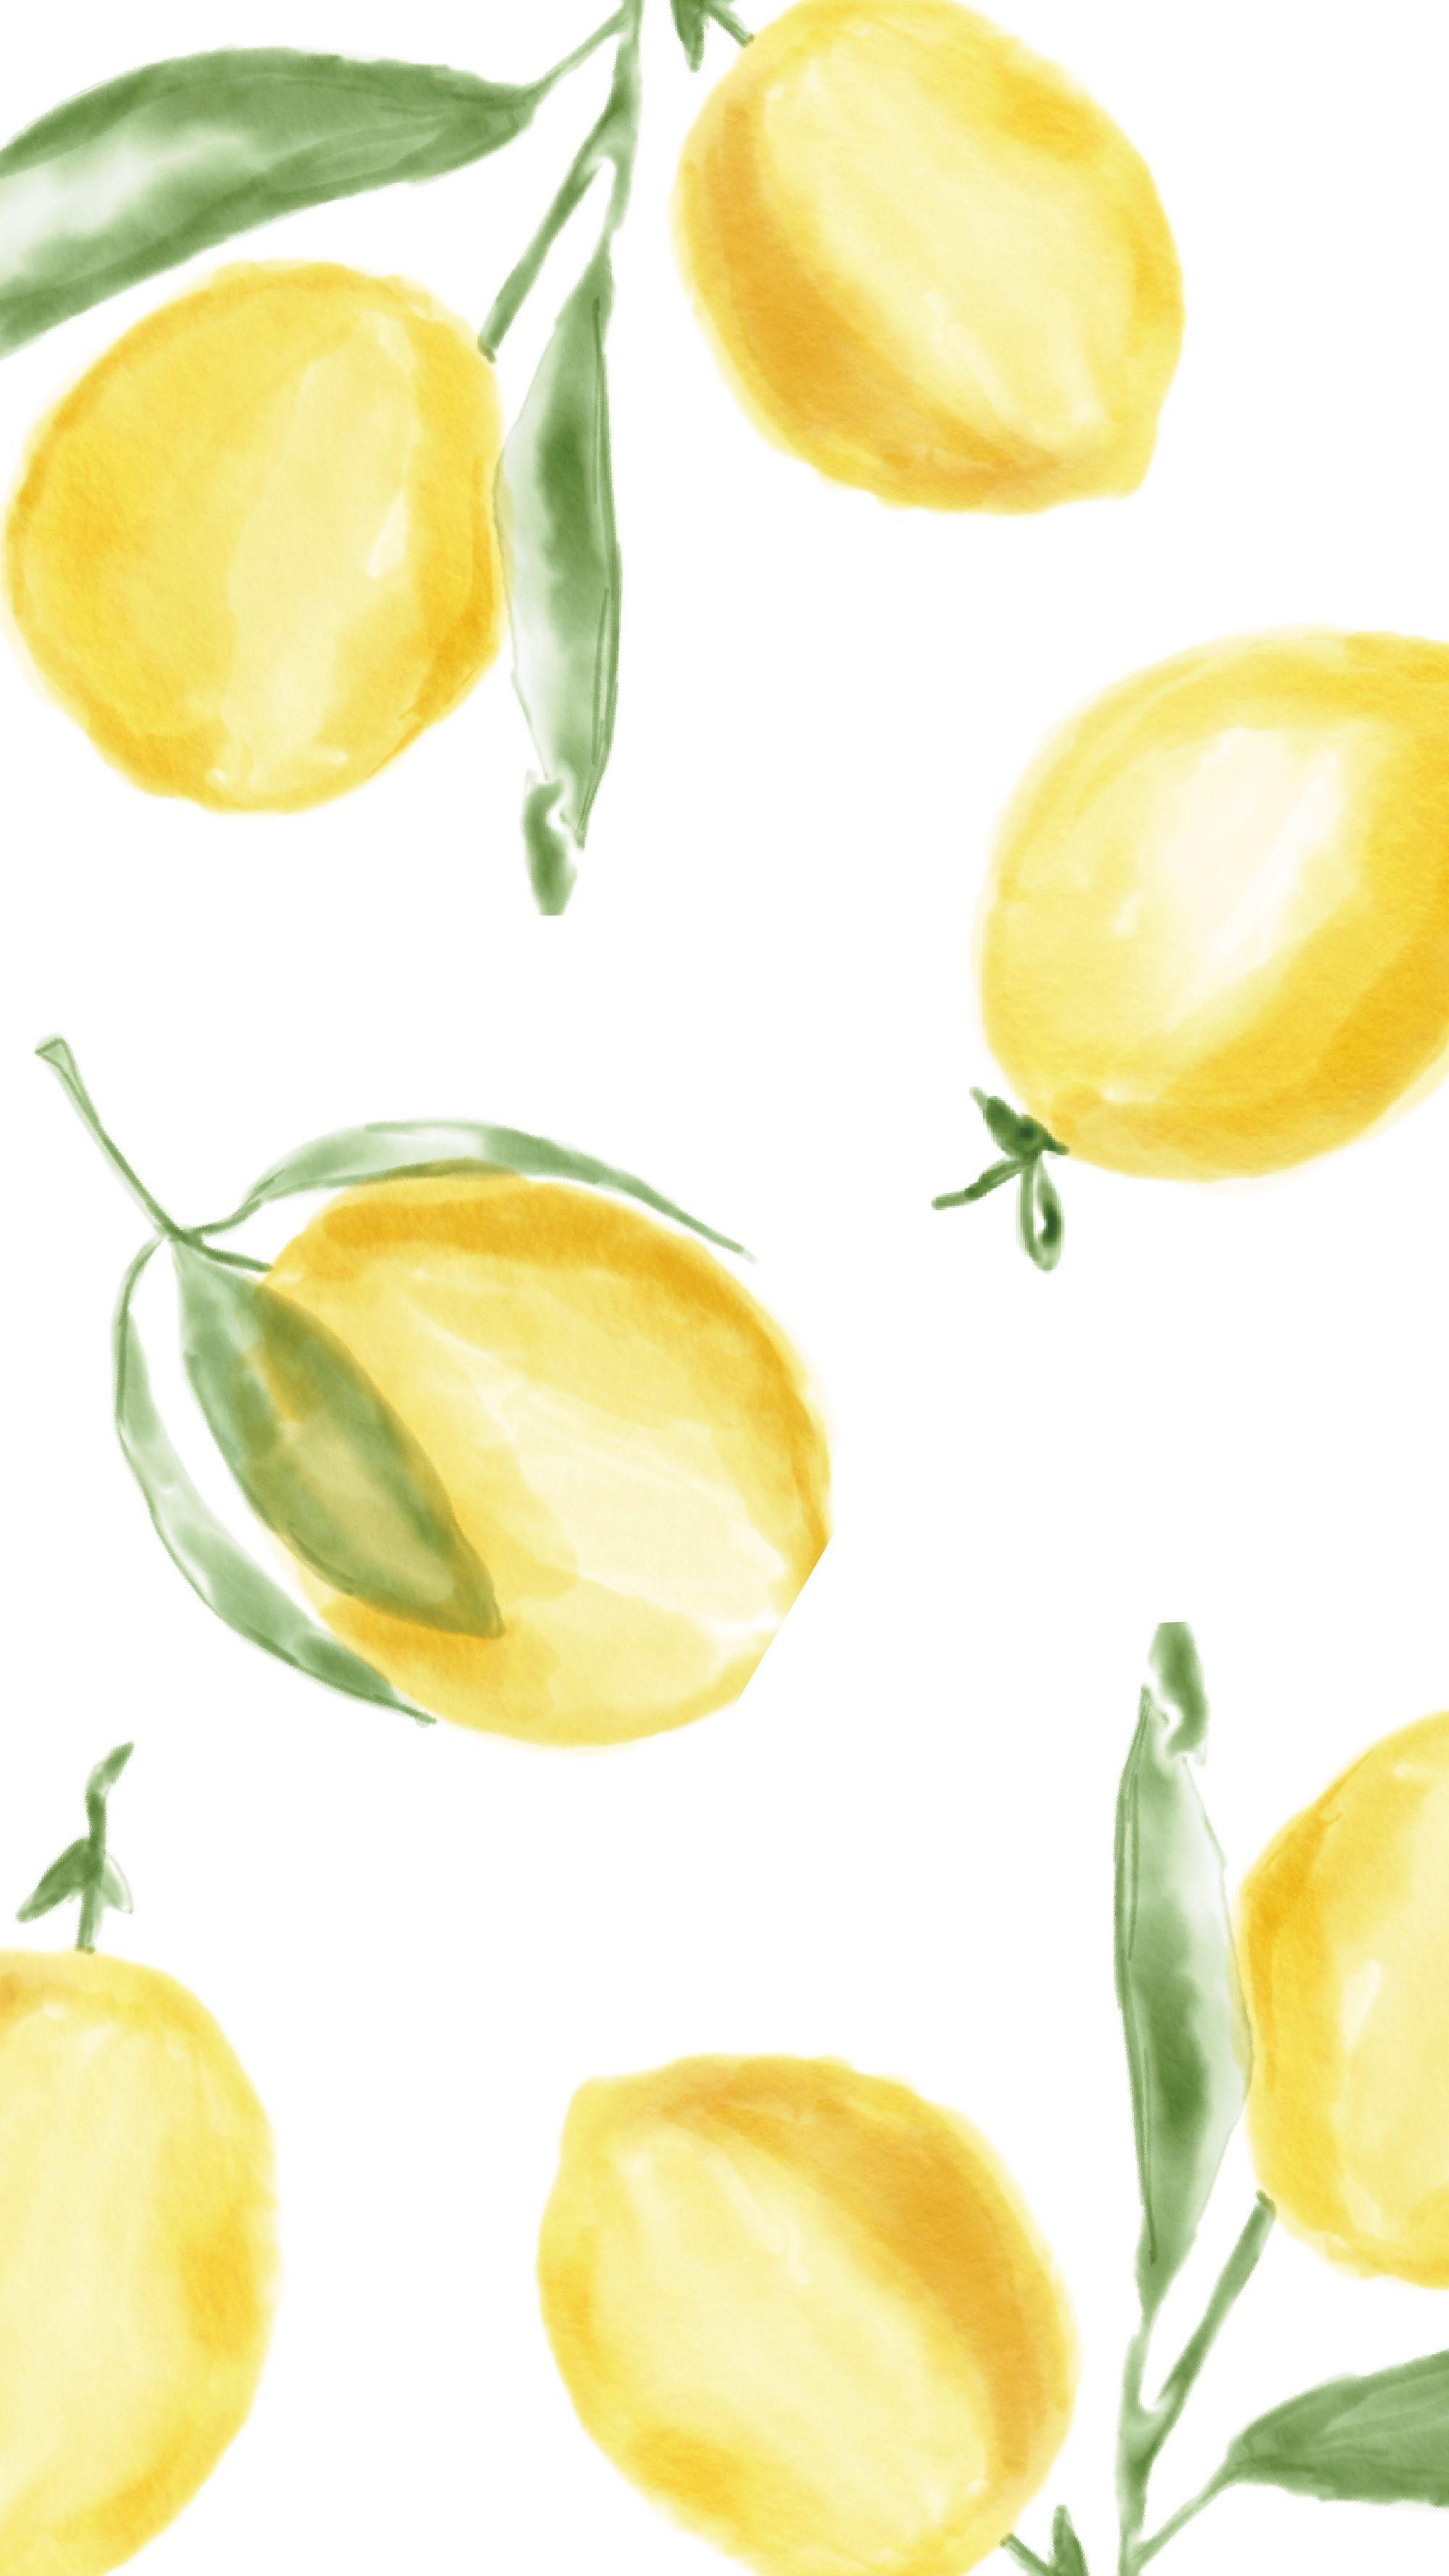 Aesthetic Lemon Wallpapers - Top Free Aesthetic Lemon Backgrounds ...